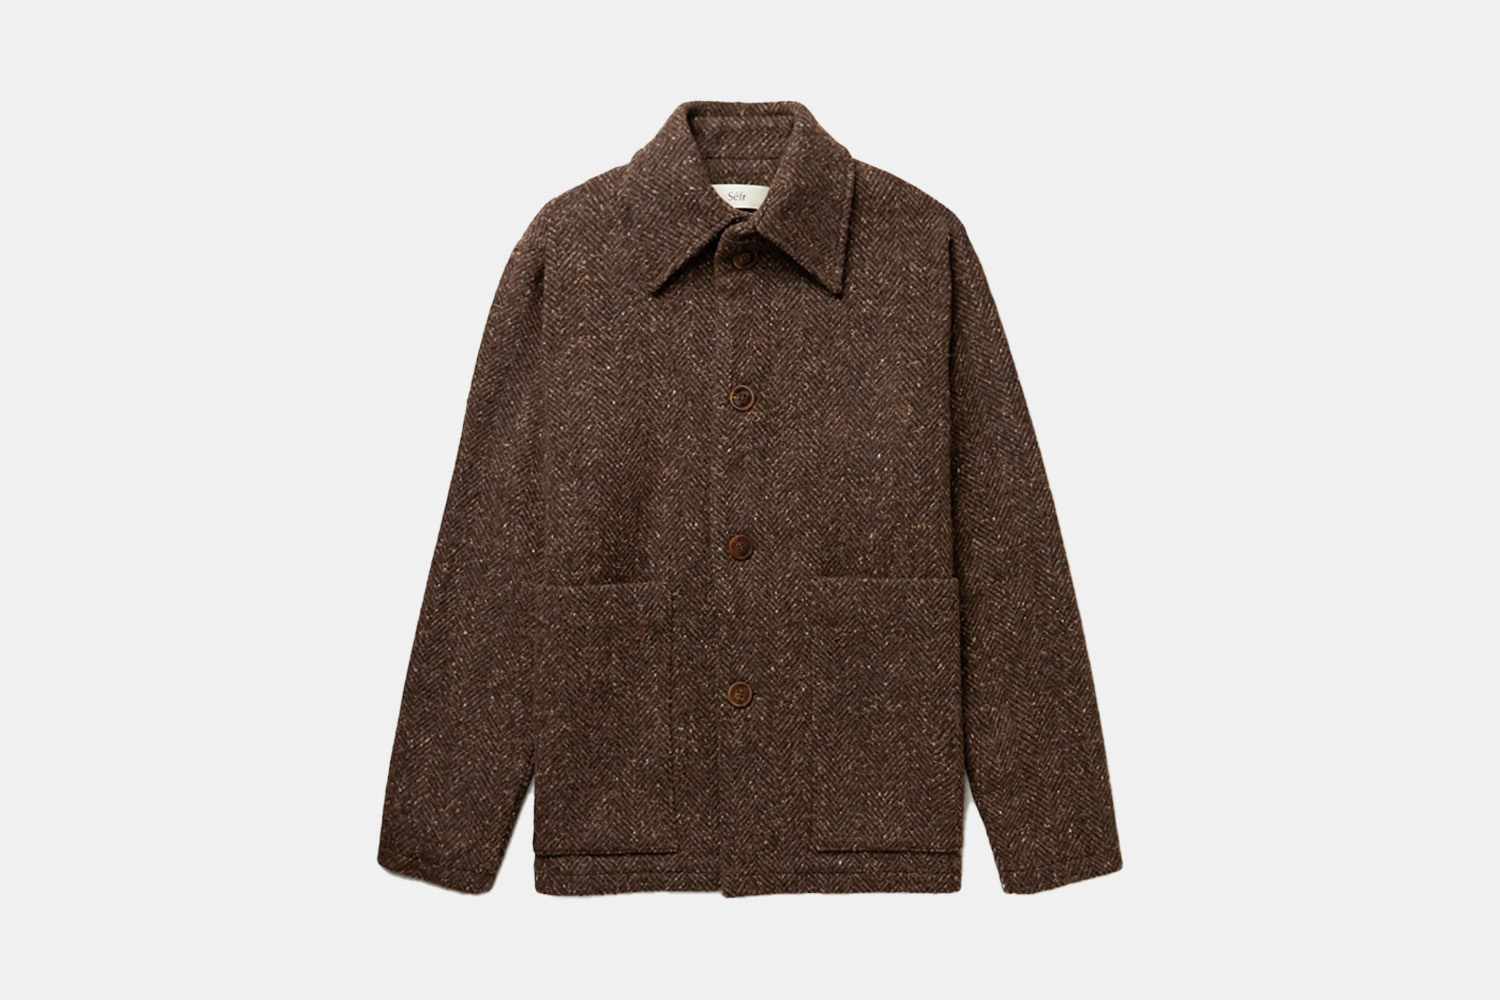 a brown cotton jacket